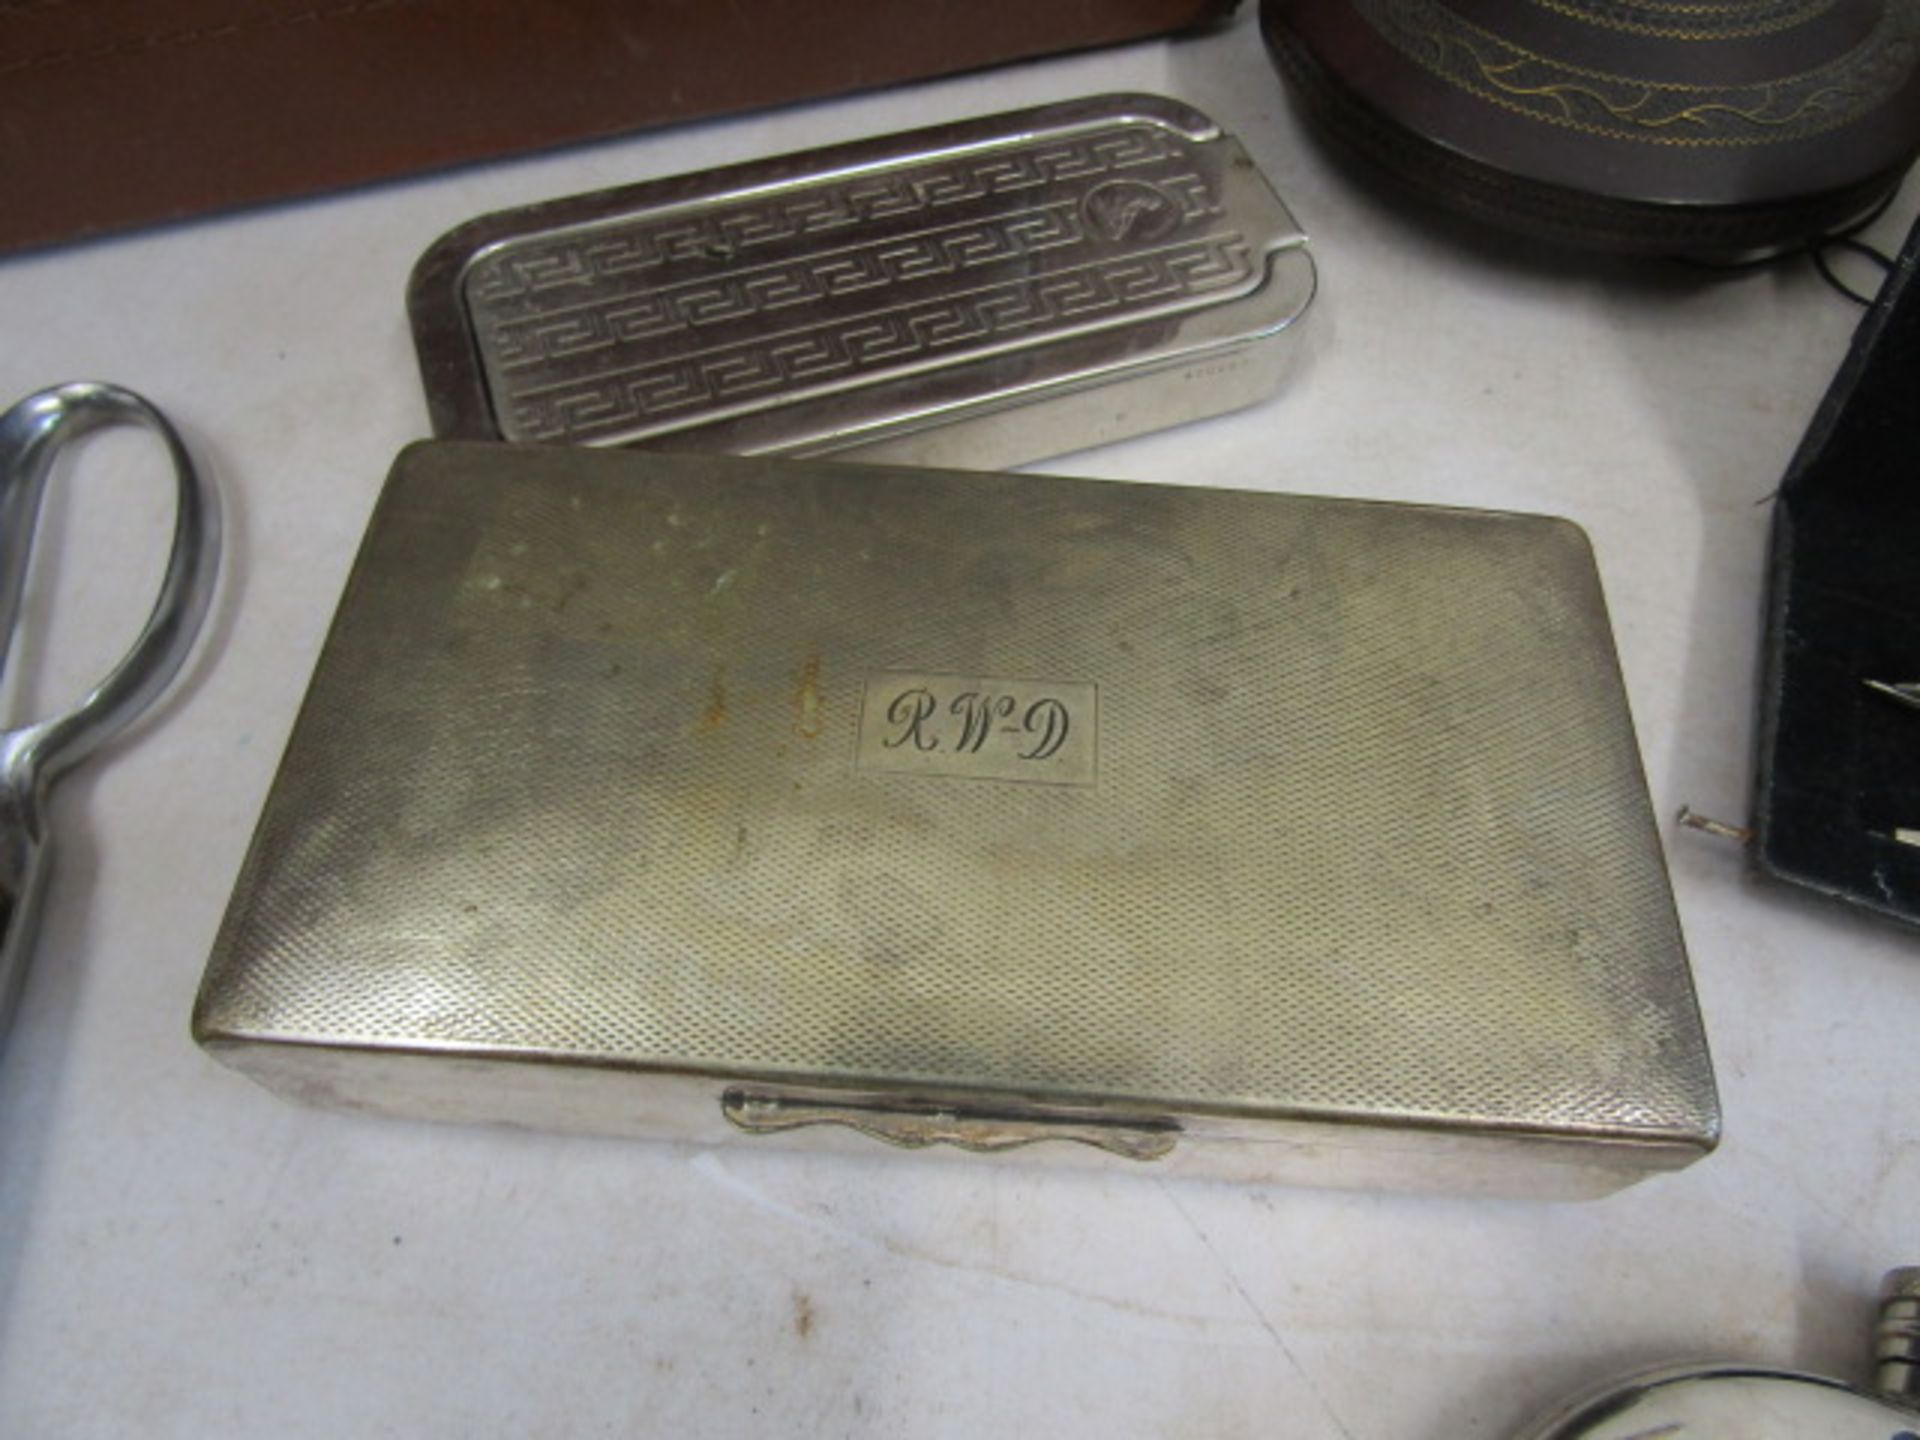 Collectors lot- copper powder flask, camera lens, cigatette box, razor etc all in a pilots bag - Image 6 of 8